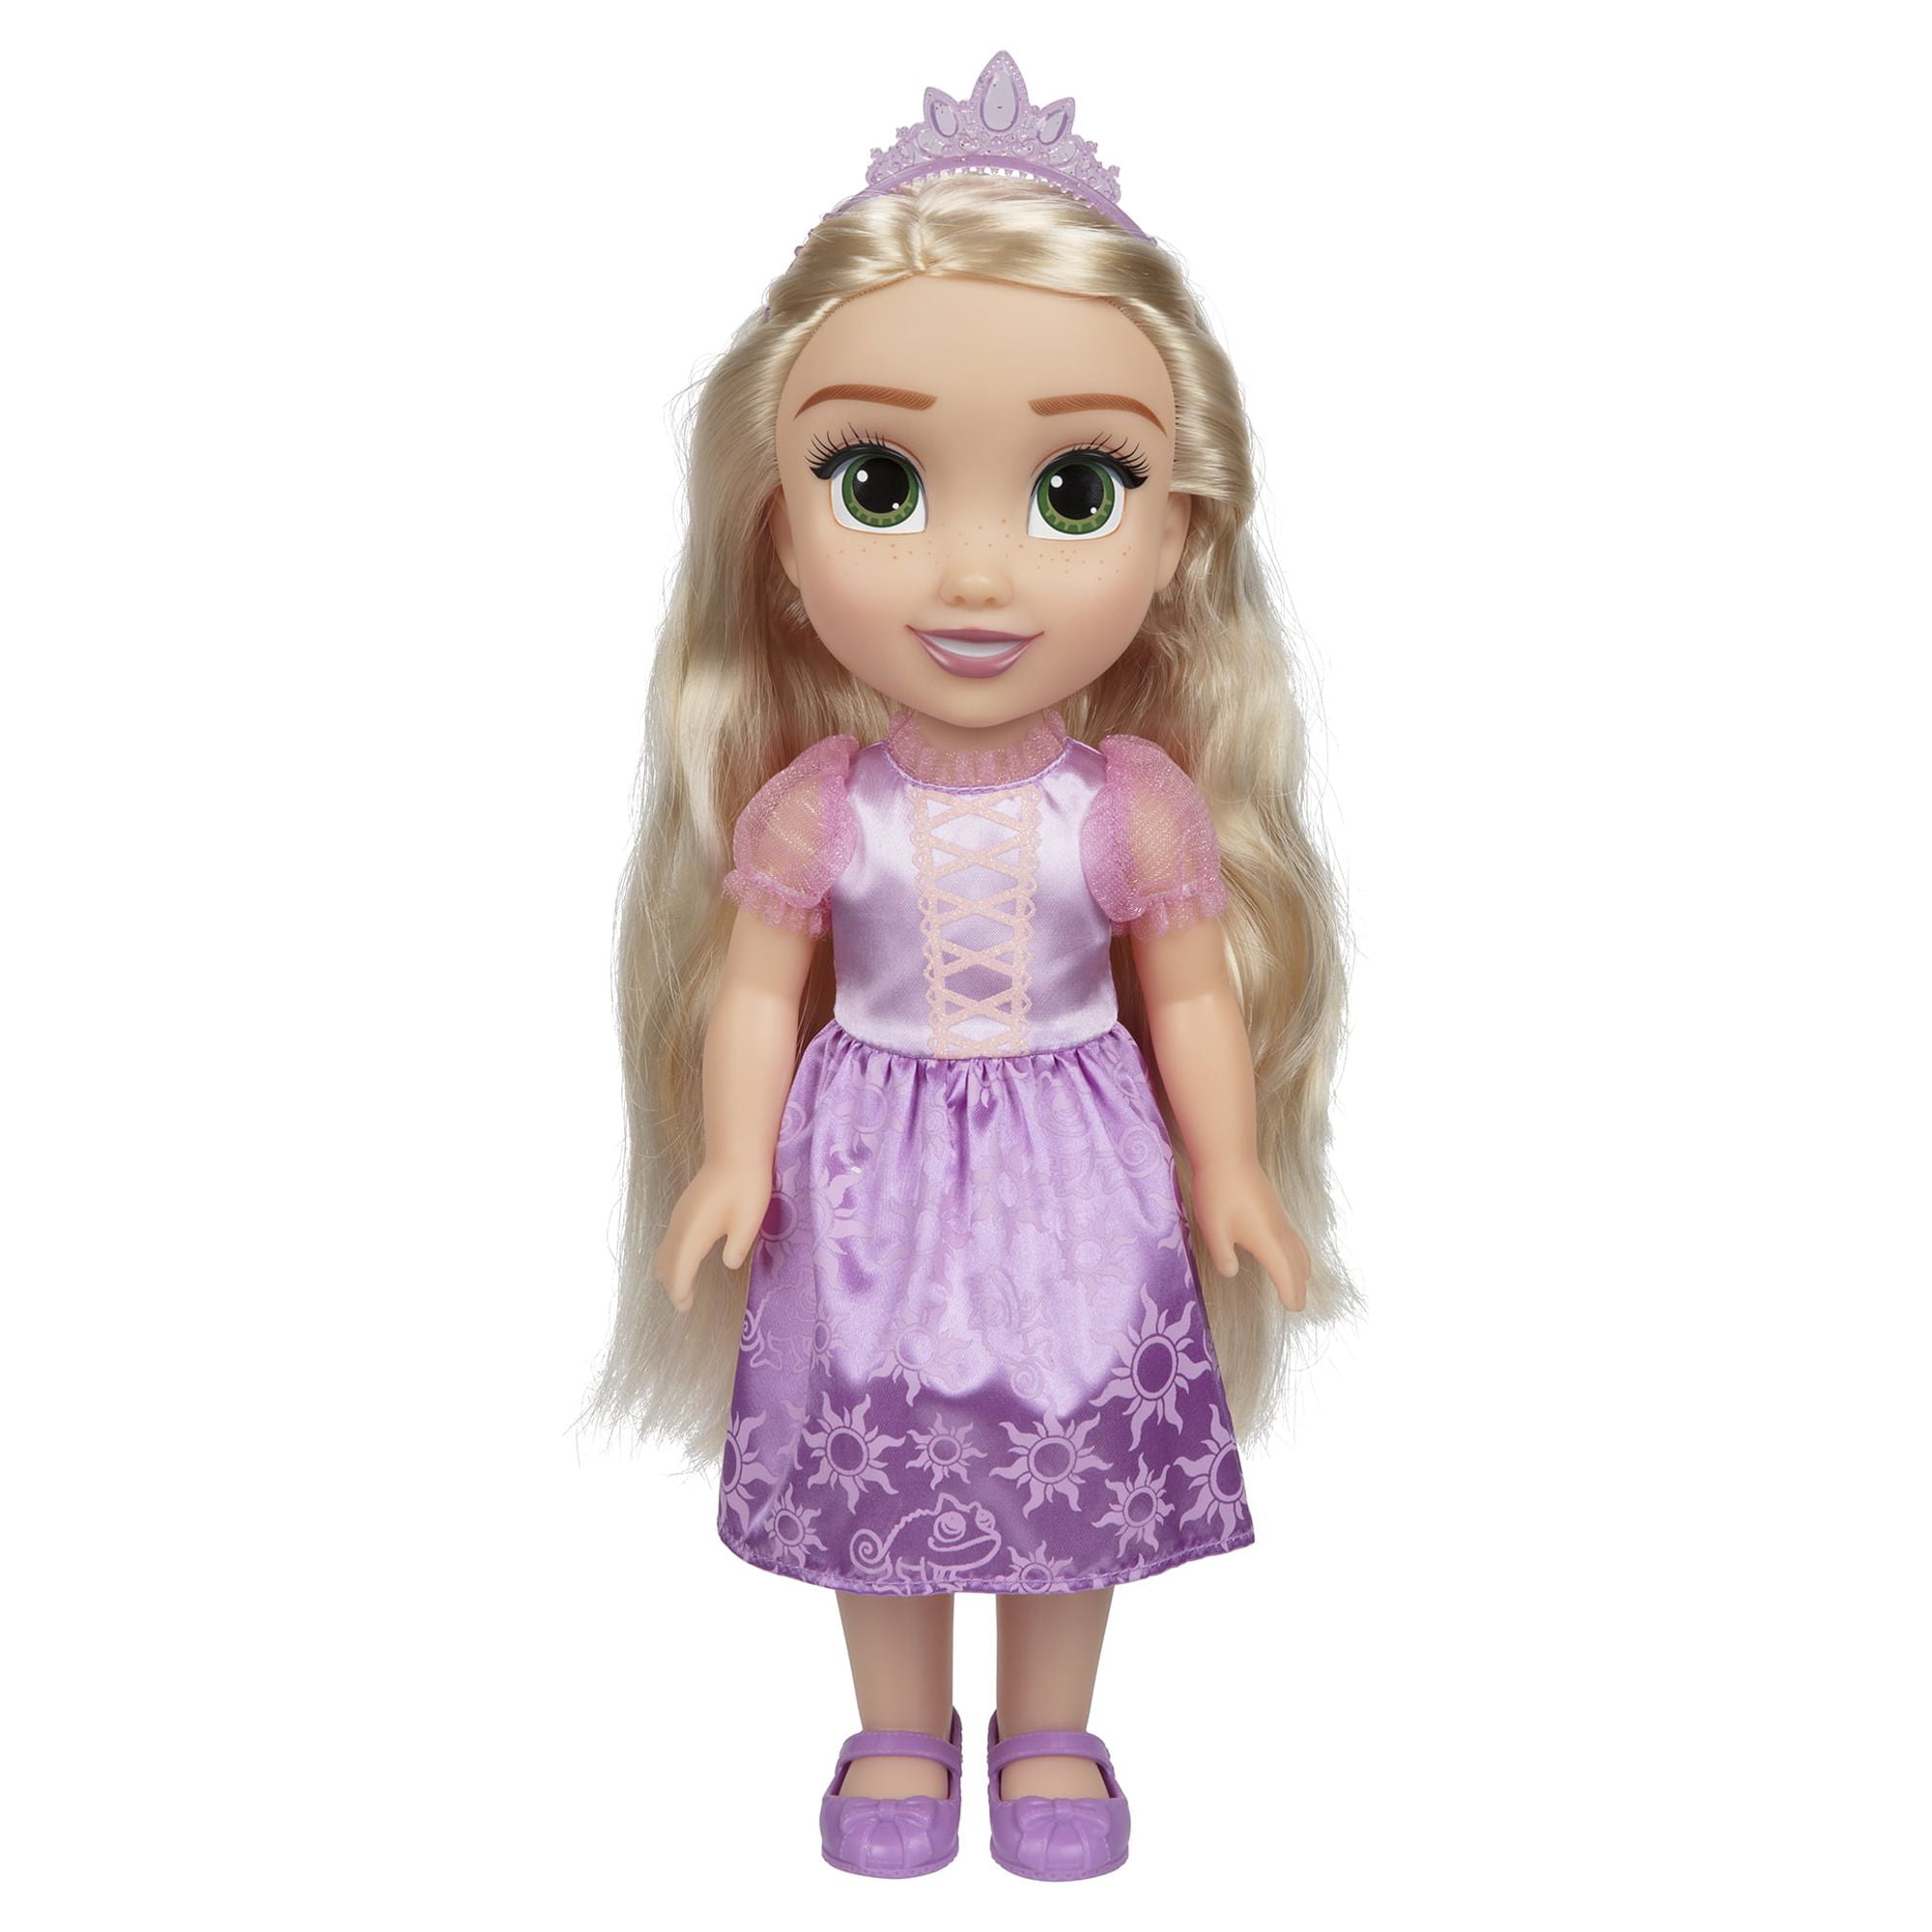 Disney Princess My Friend Rapunzel Doll, 1 ct - Kroger